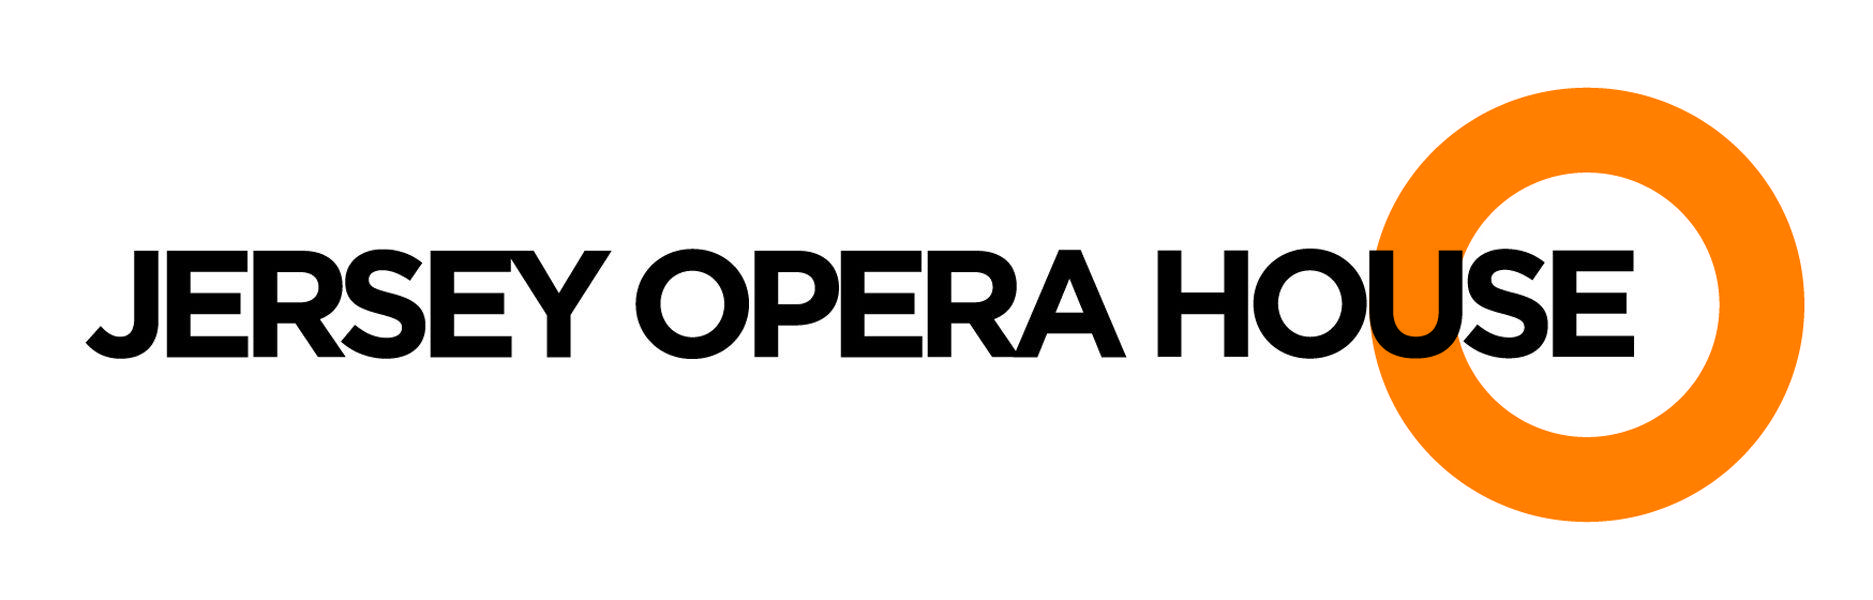 Opera House Logo - Jersey Arts Centre | Jersey-Opera-House-New-Logo